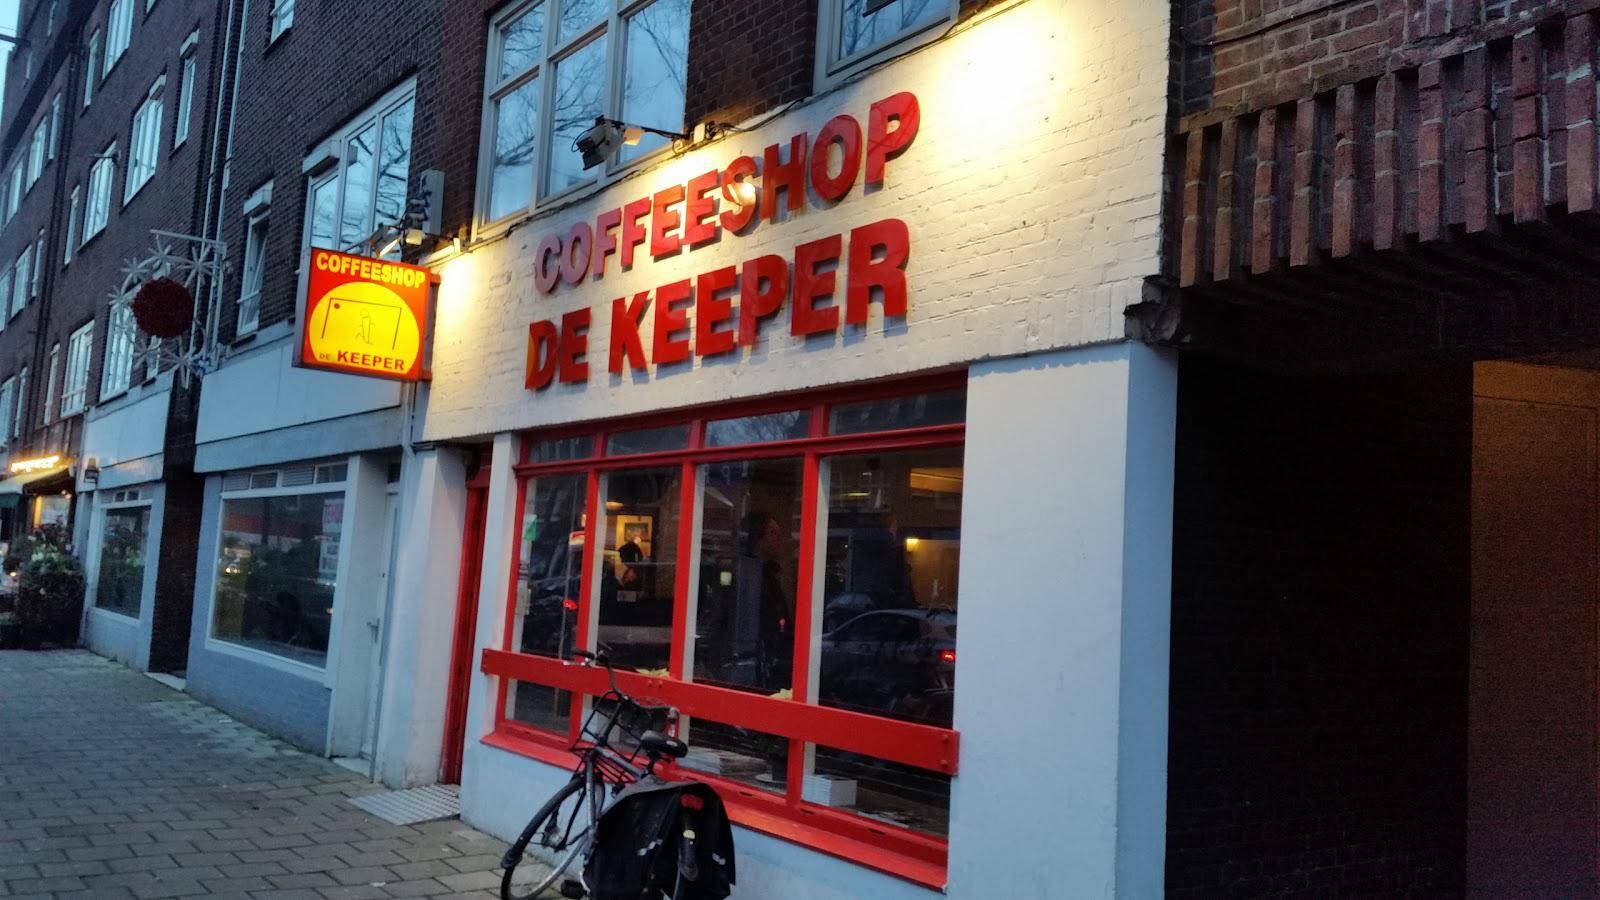 Coffeeshop de Keeper à Amsterdam, les Pays-Bas | DutchCoffeeshops.com